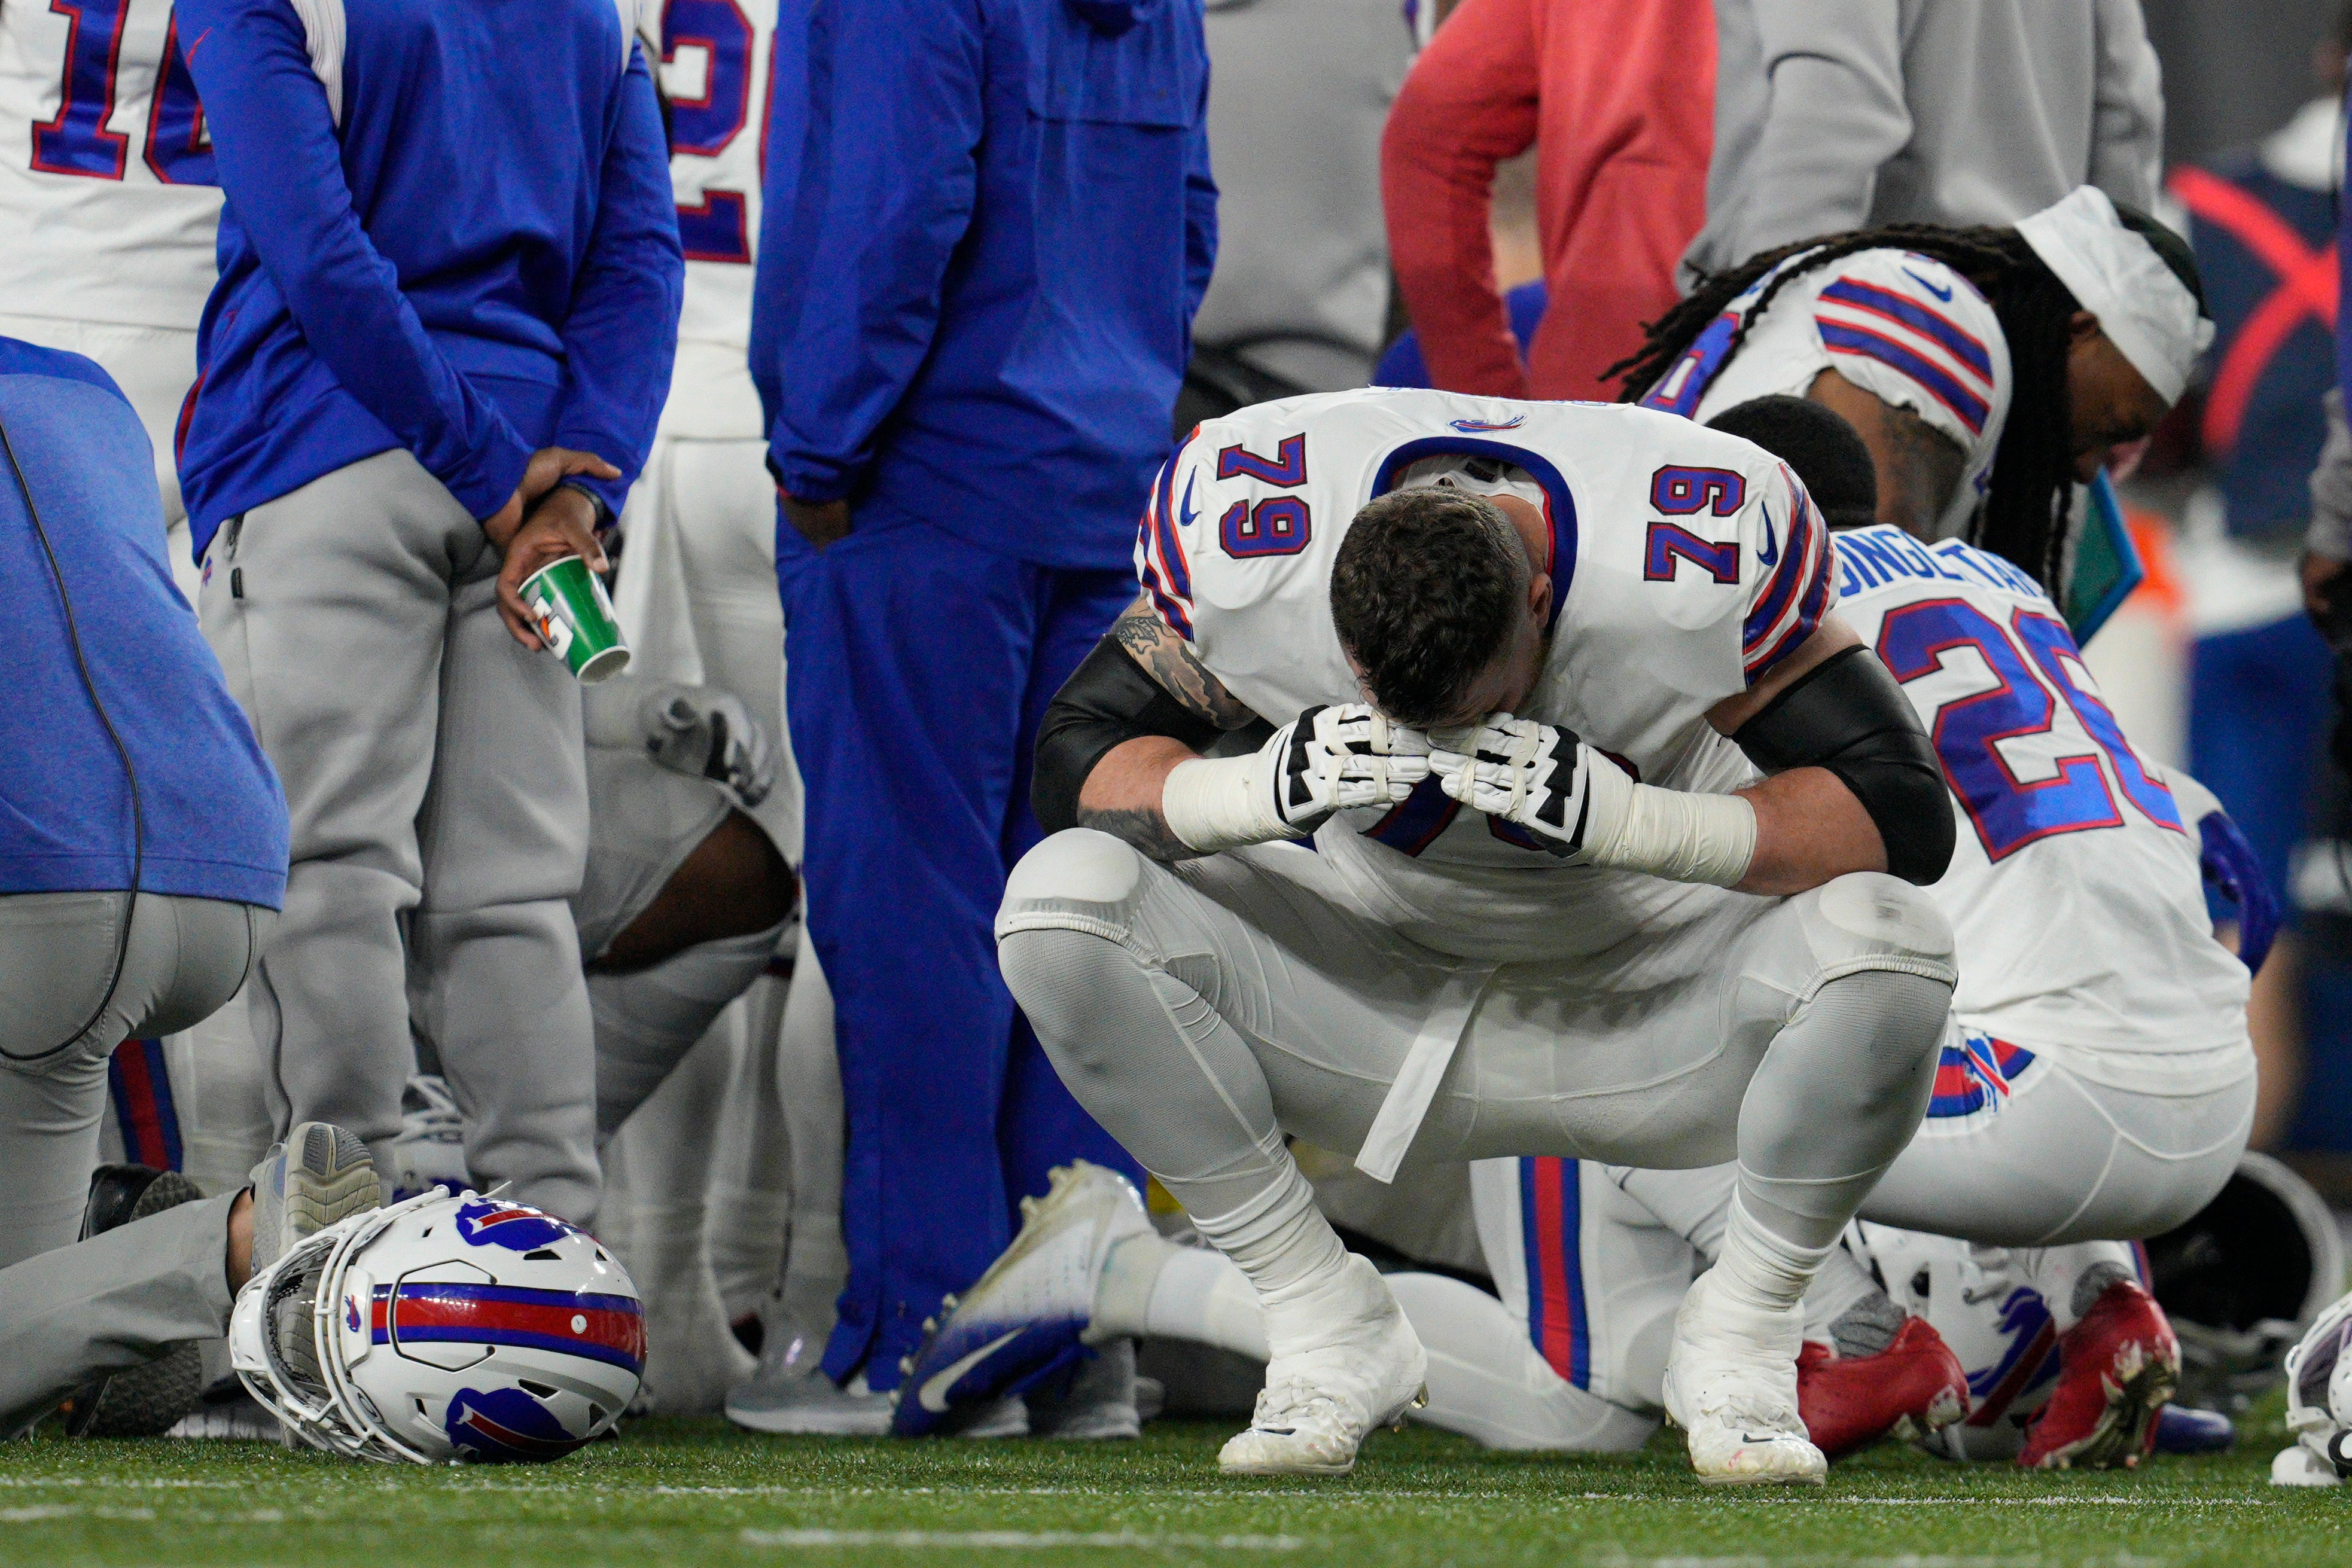 Hamlin’s Bills teammates were visibly emotional alongside him on the field